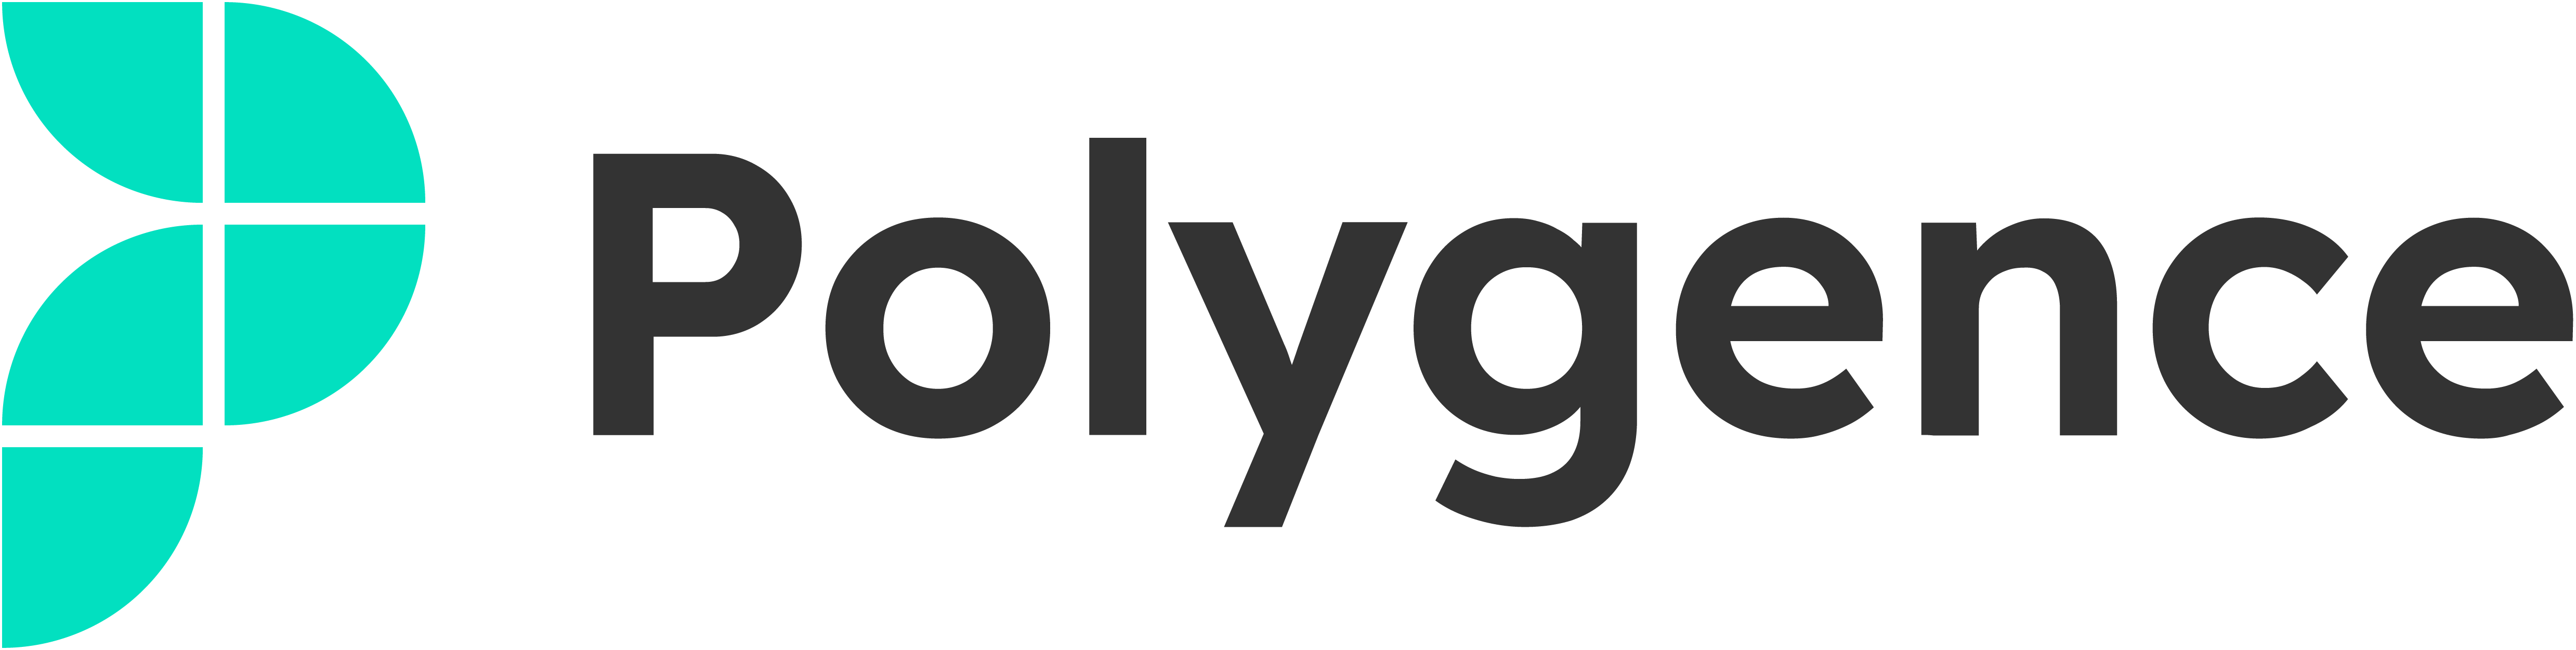 Polygence logo